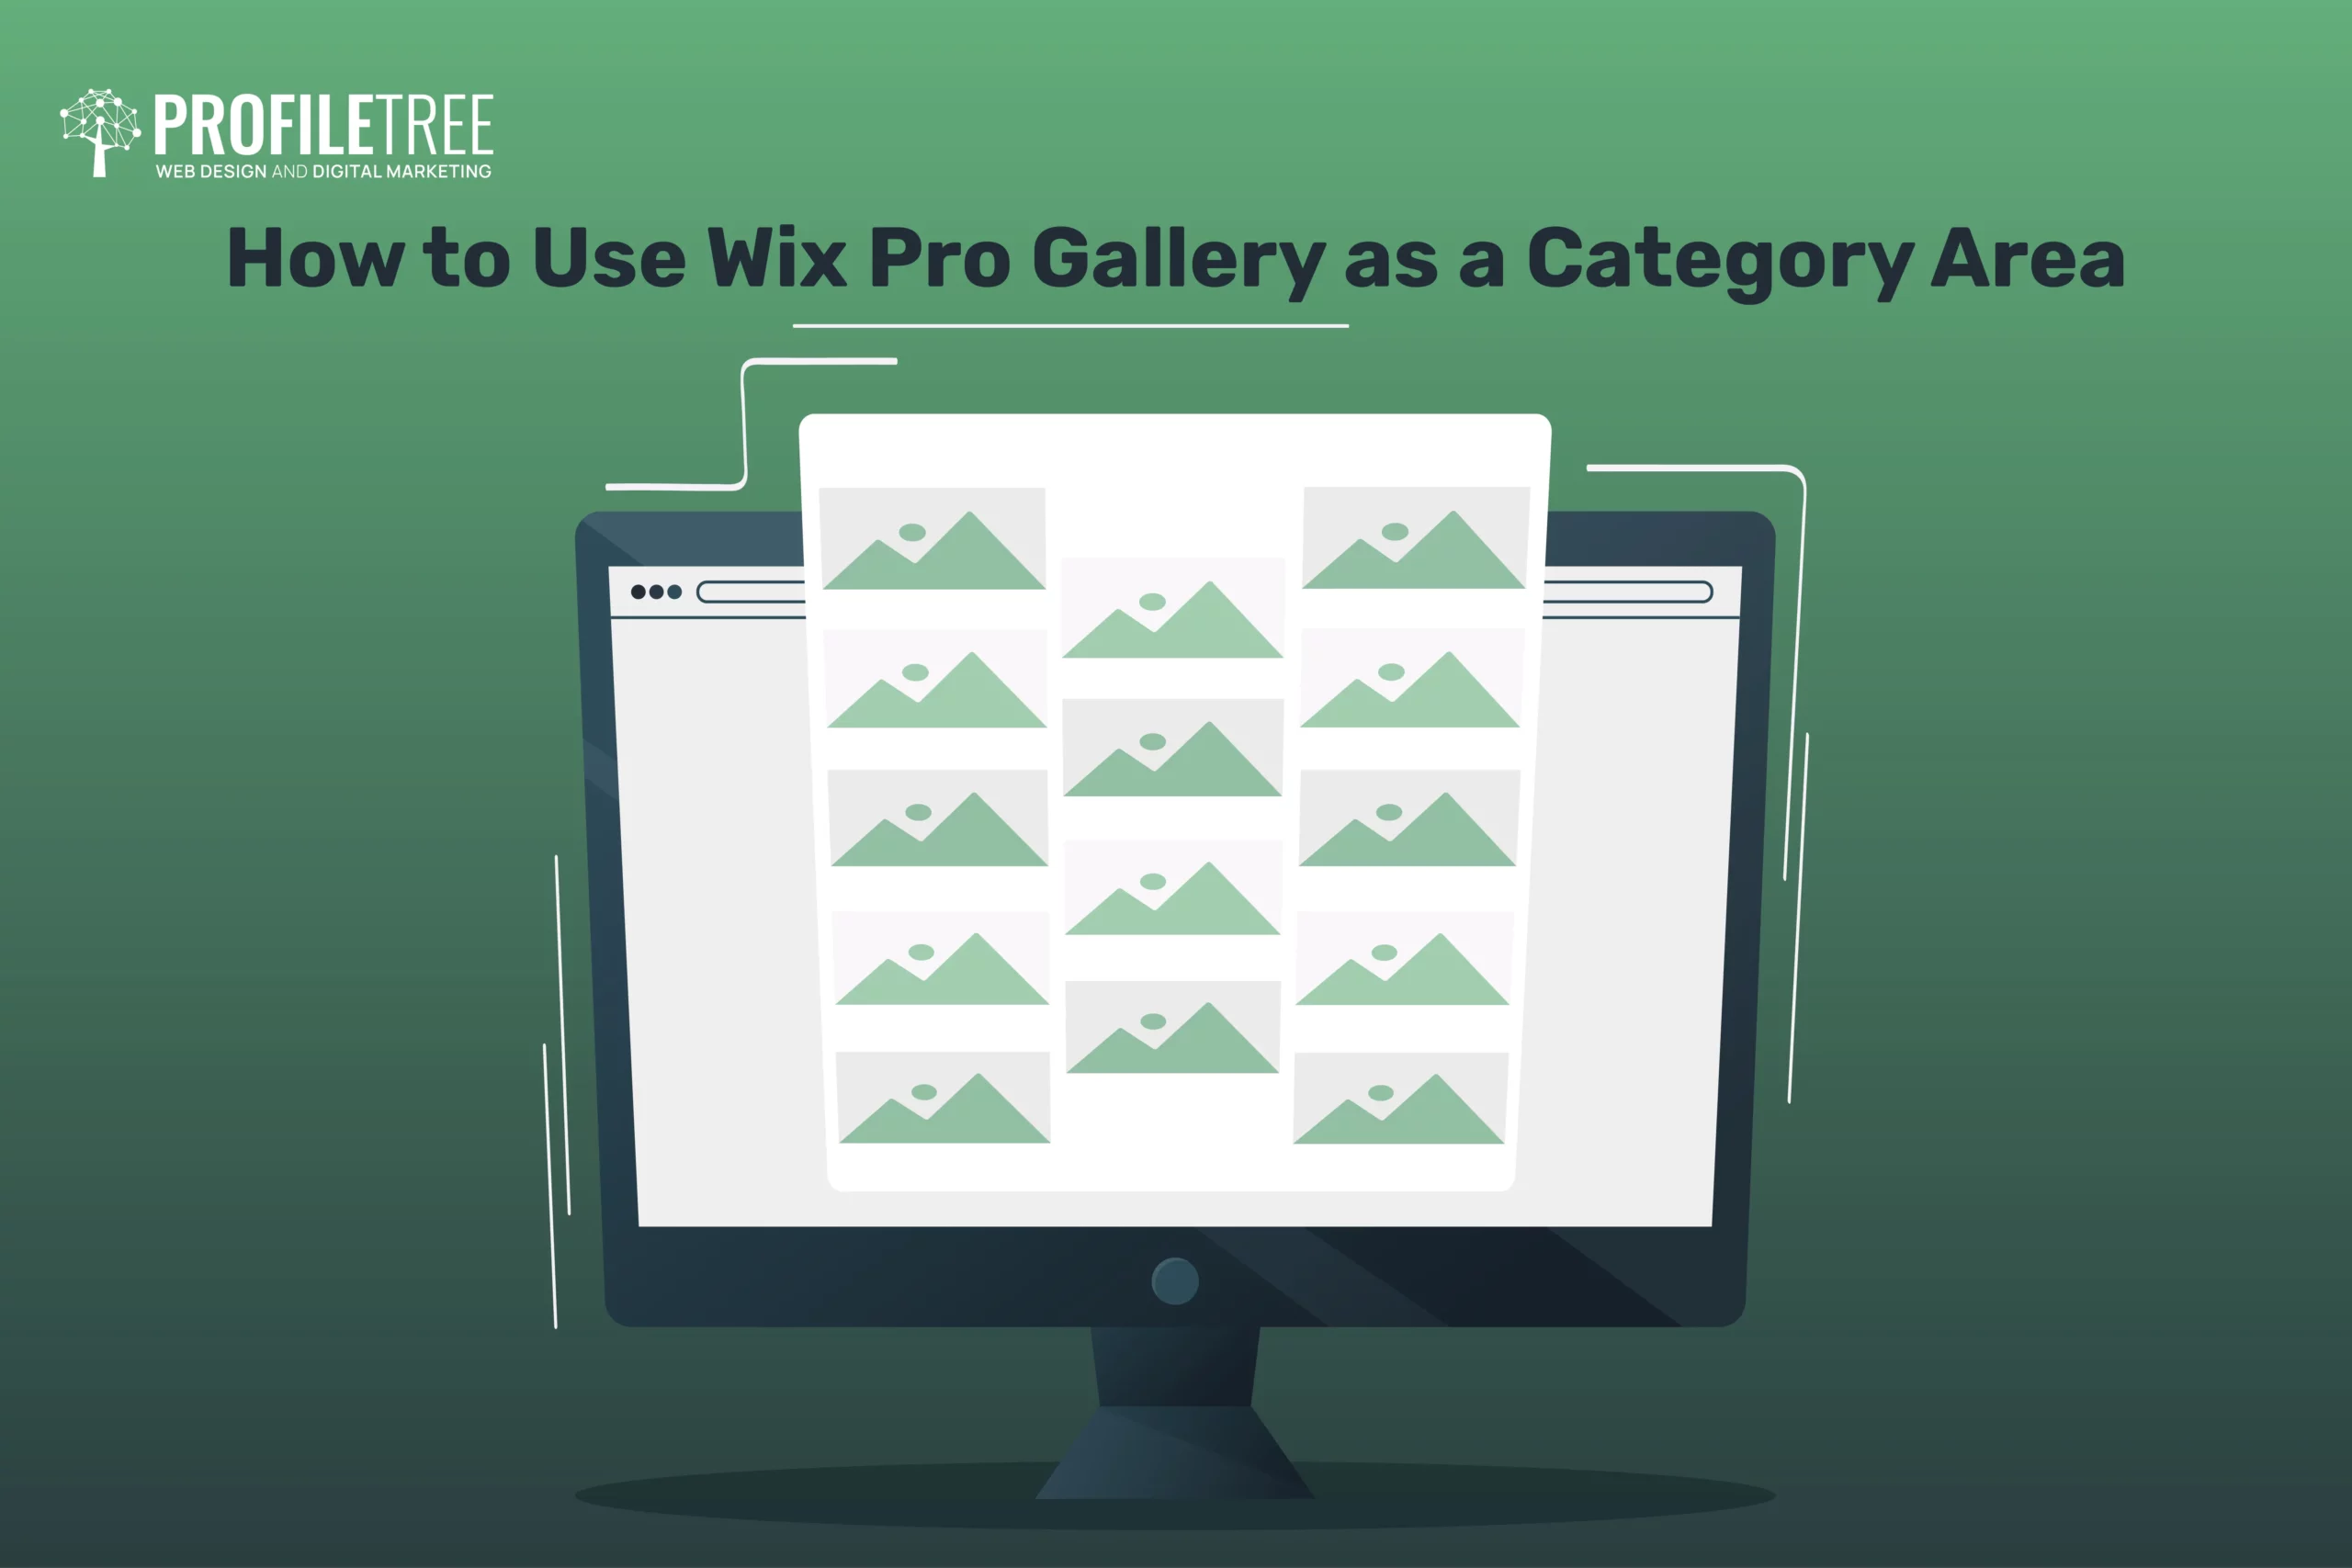 Wix Pro Gallery